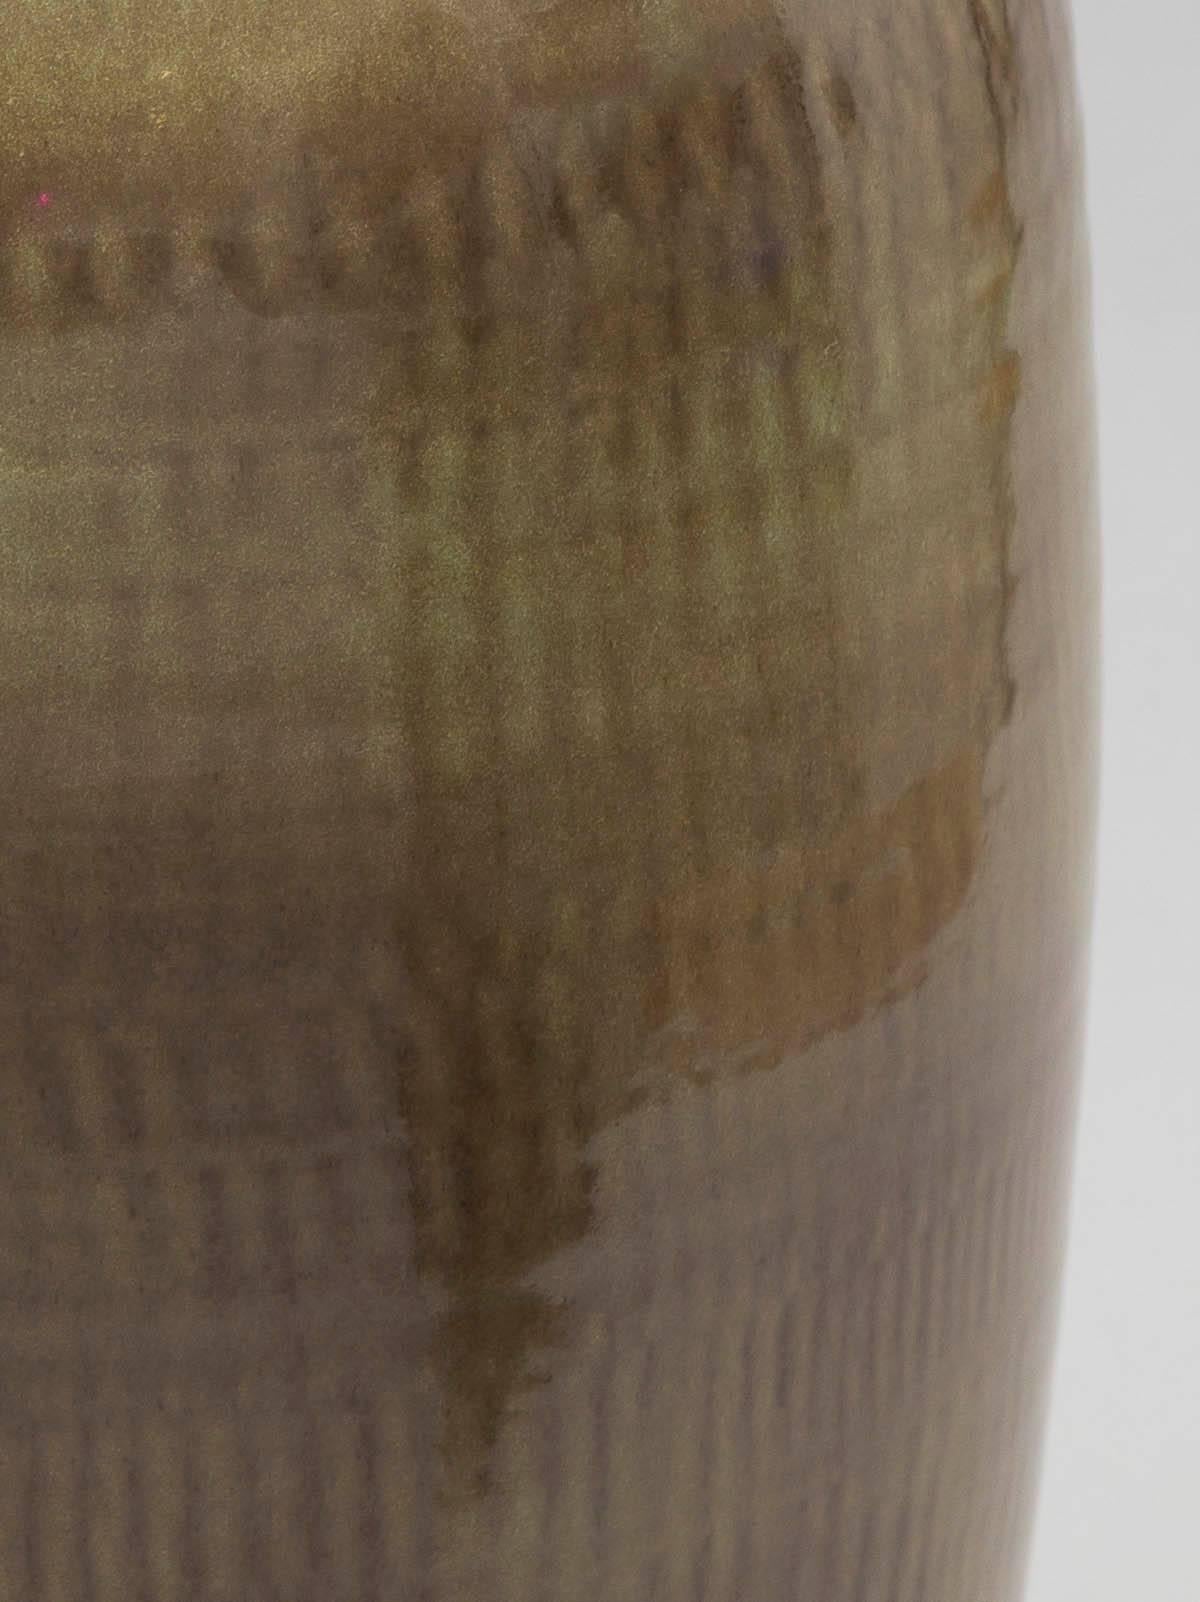 Contemporary '2015' Green Celadon Vase, One of a Kind, Karen Swami For Sale 1